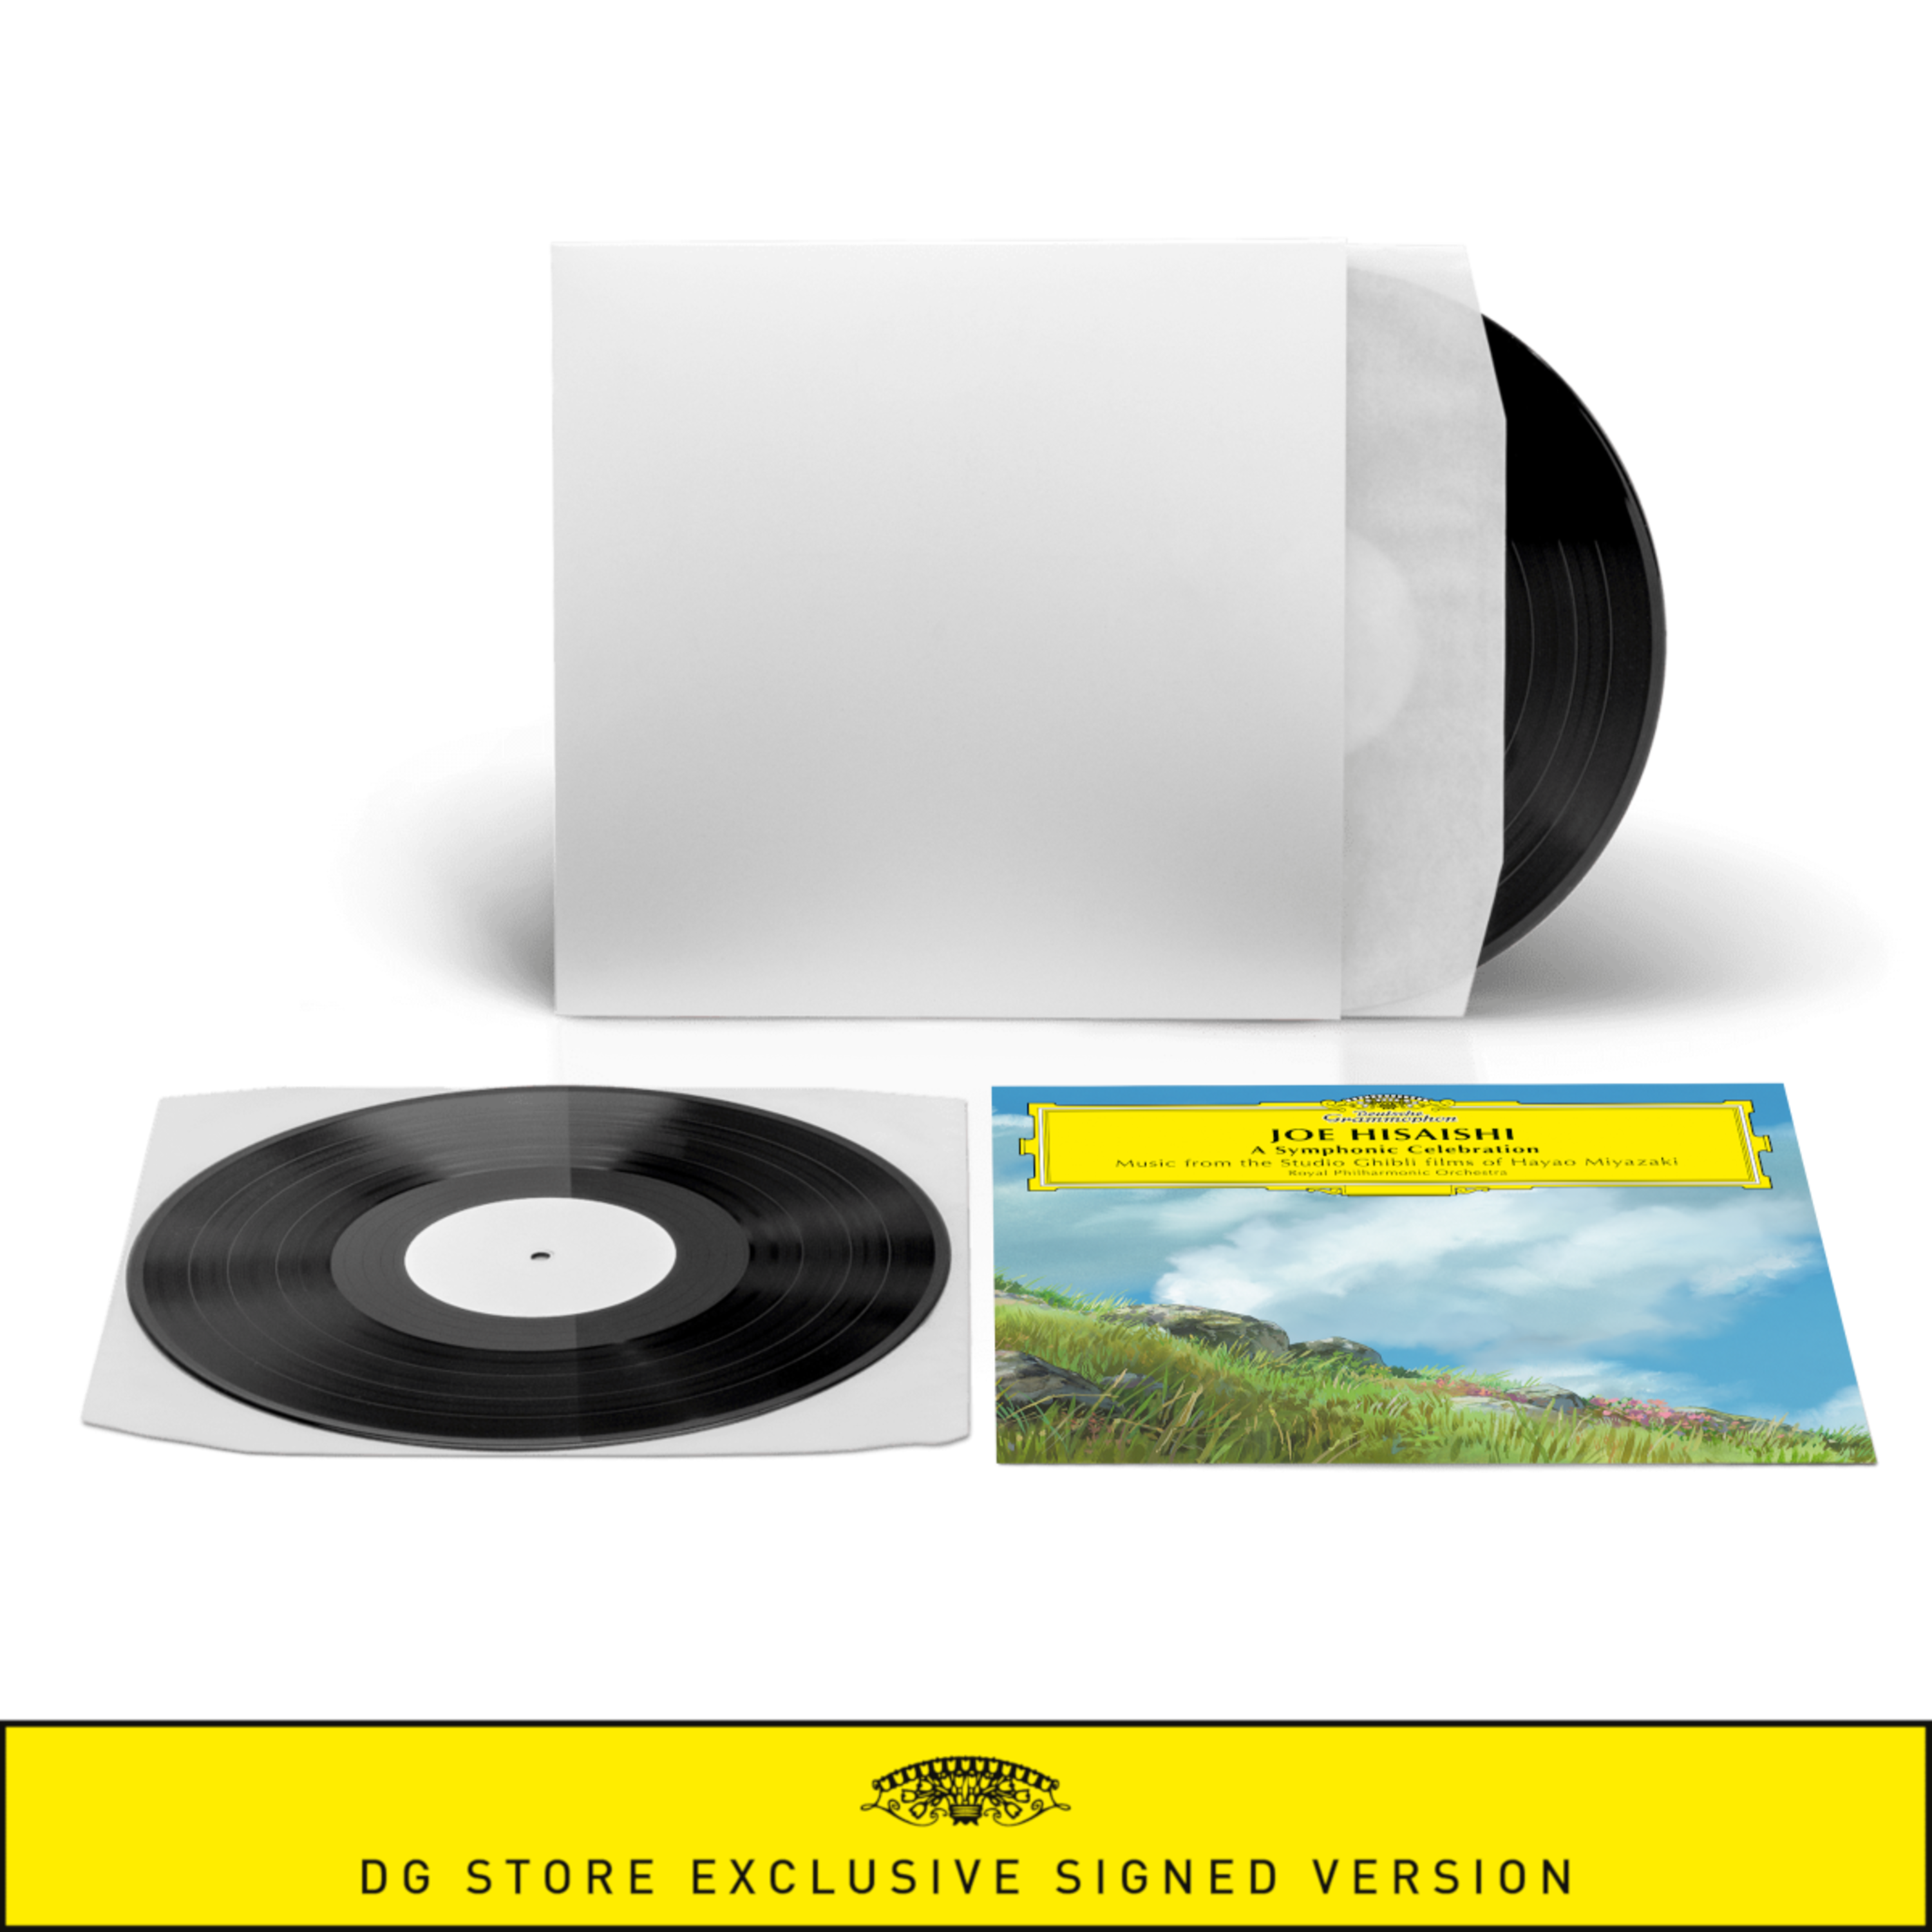 Deutsche Grammophon - Der offizielle Shop - A Symphonic Celebration - Joe  Hisaishi - Limited Signed Numbered 2 Vinyl White Label + Art Card